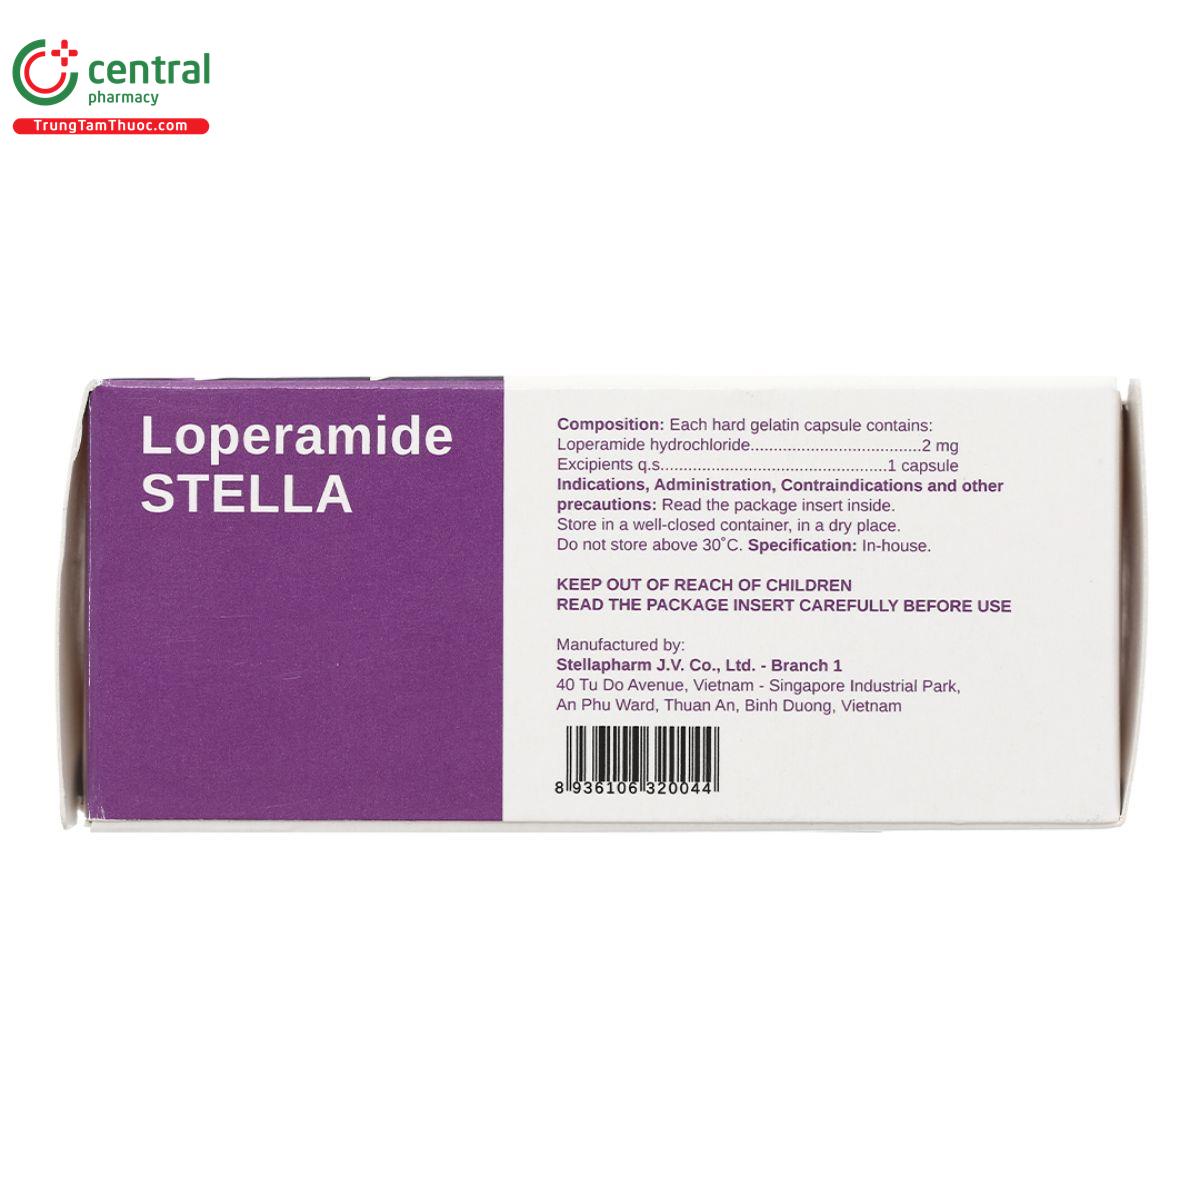 thuoc loperamide stella 6 I3500